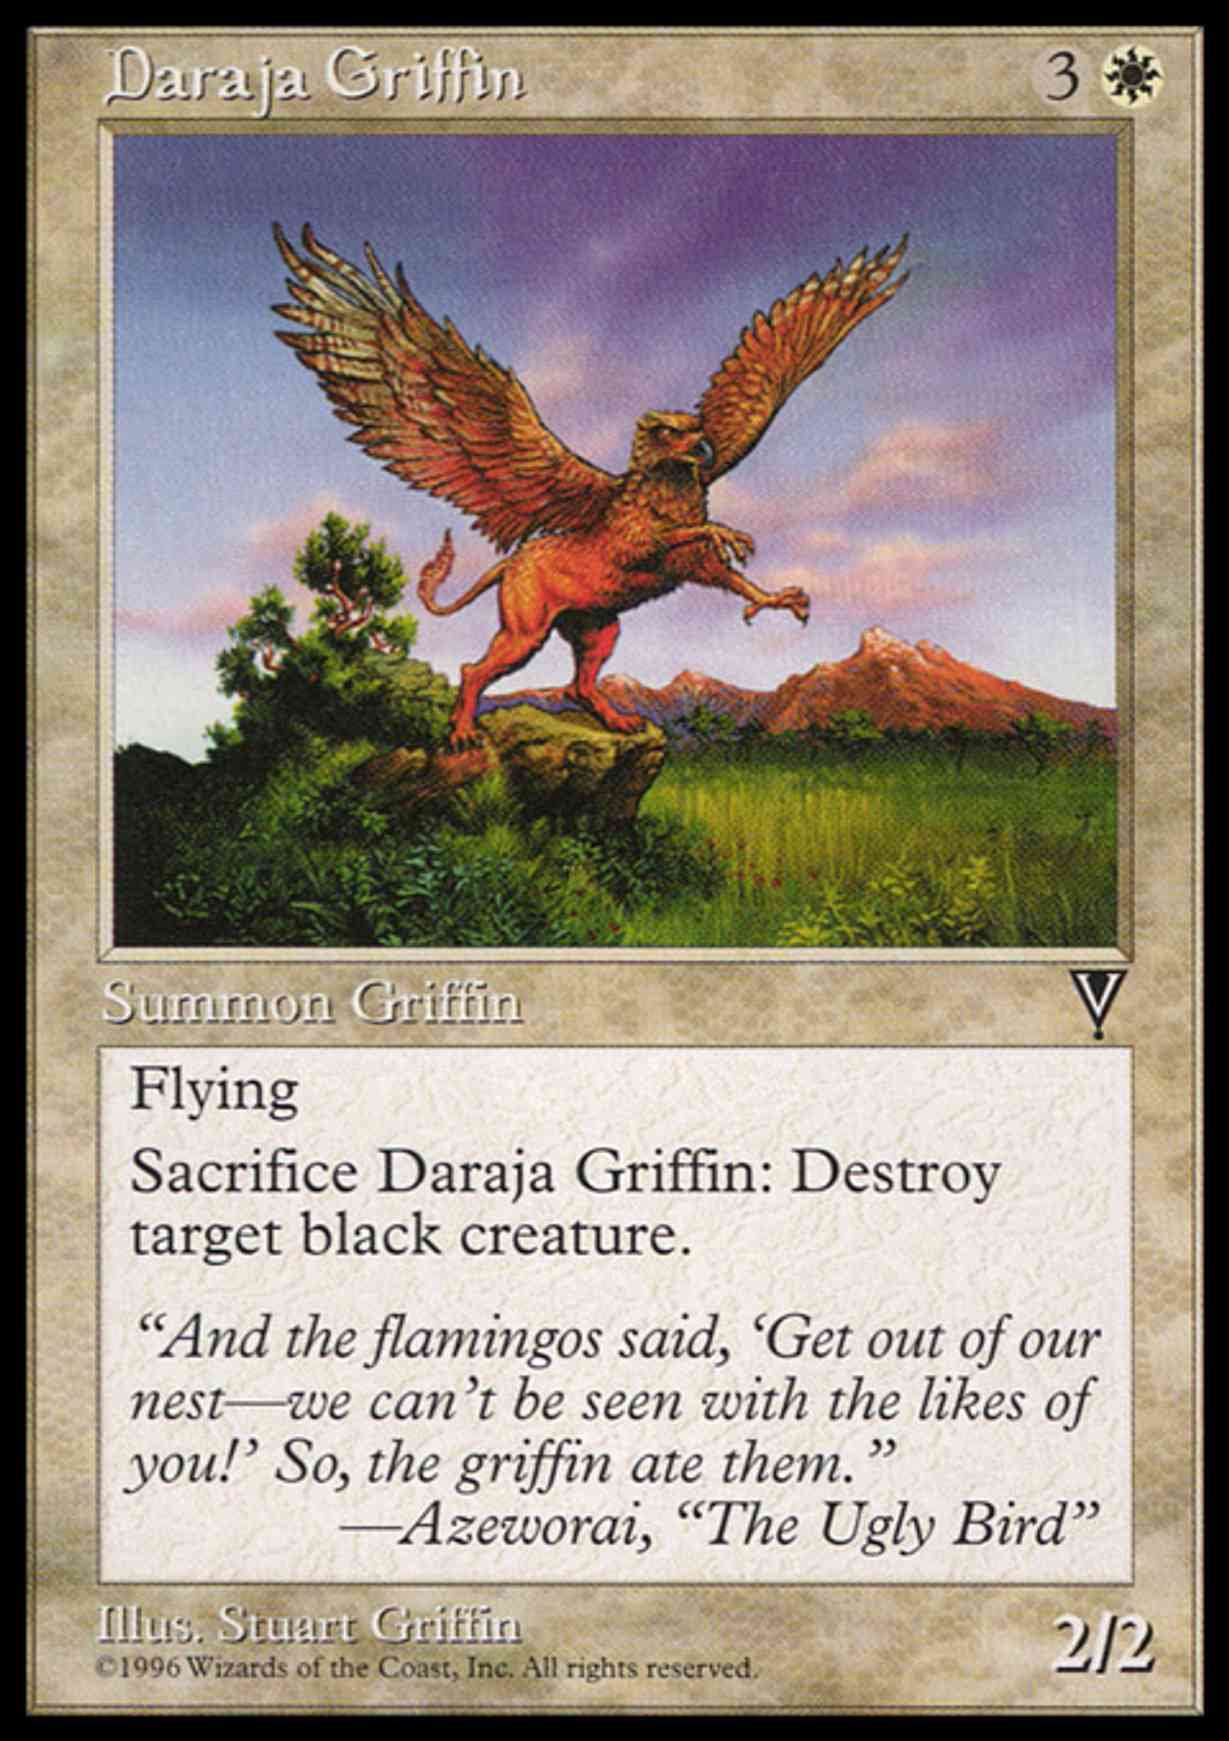 Daraja Griffin magic card front